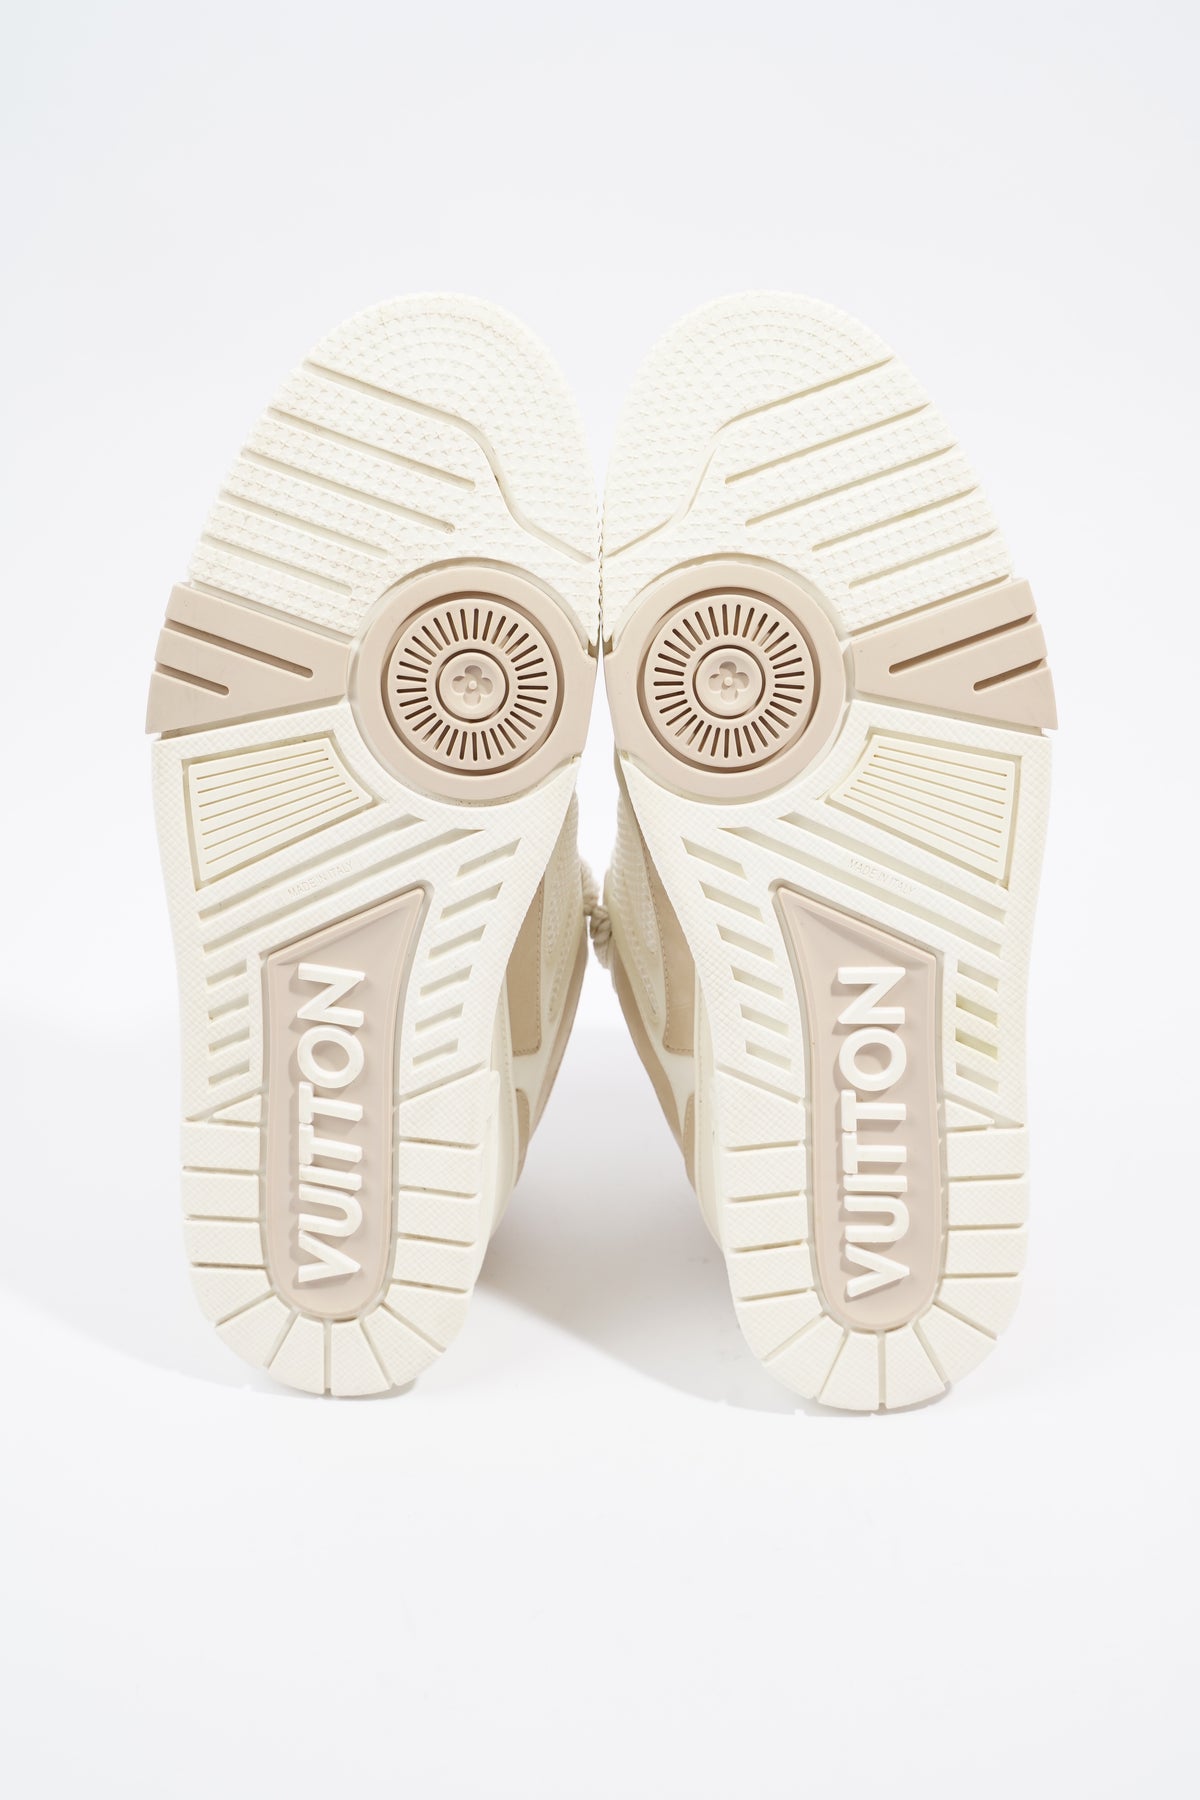 Louis Vuitton Skate Sneaker White / Beige EU 43.5 / UK 9.5 – Luxe